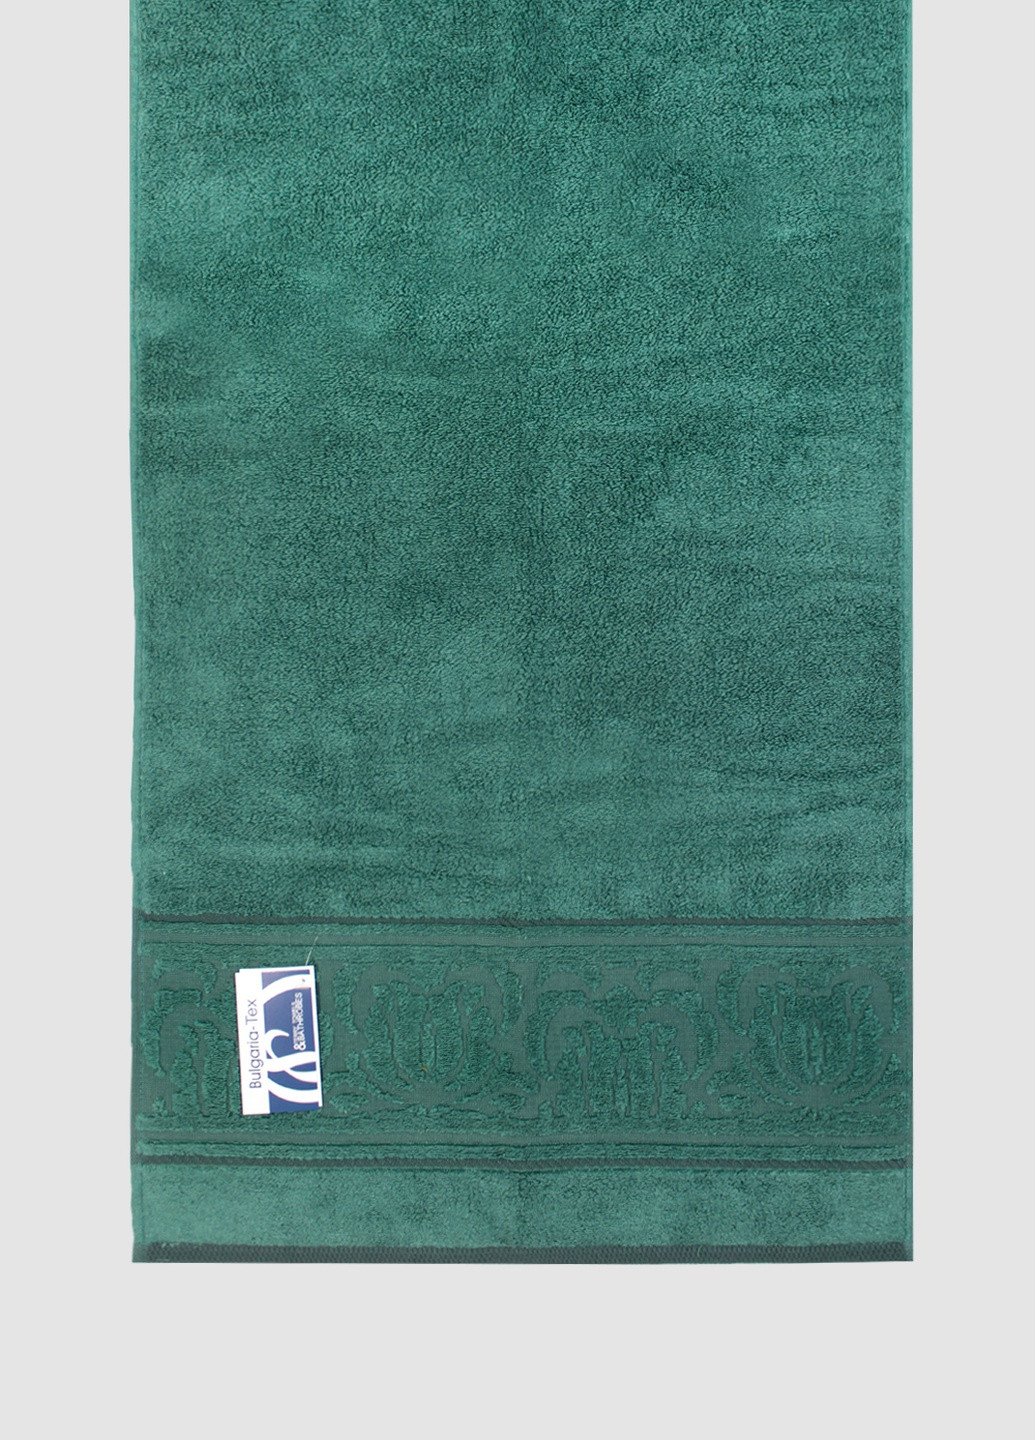 Bulgaria-Tex полотенце махровое bella, microcotton, зеленое, размер 50x90 cm зеленый производство - Болгария